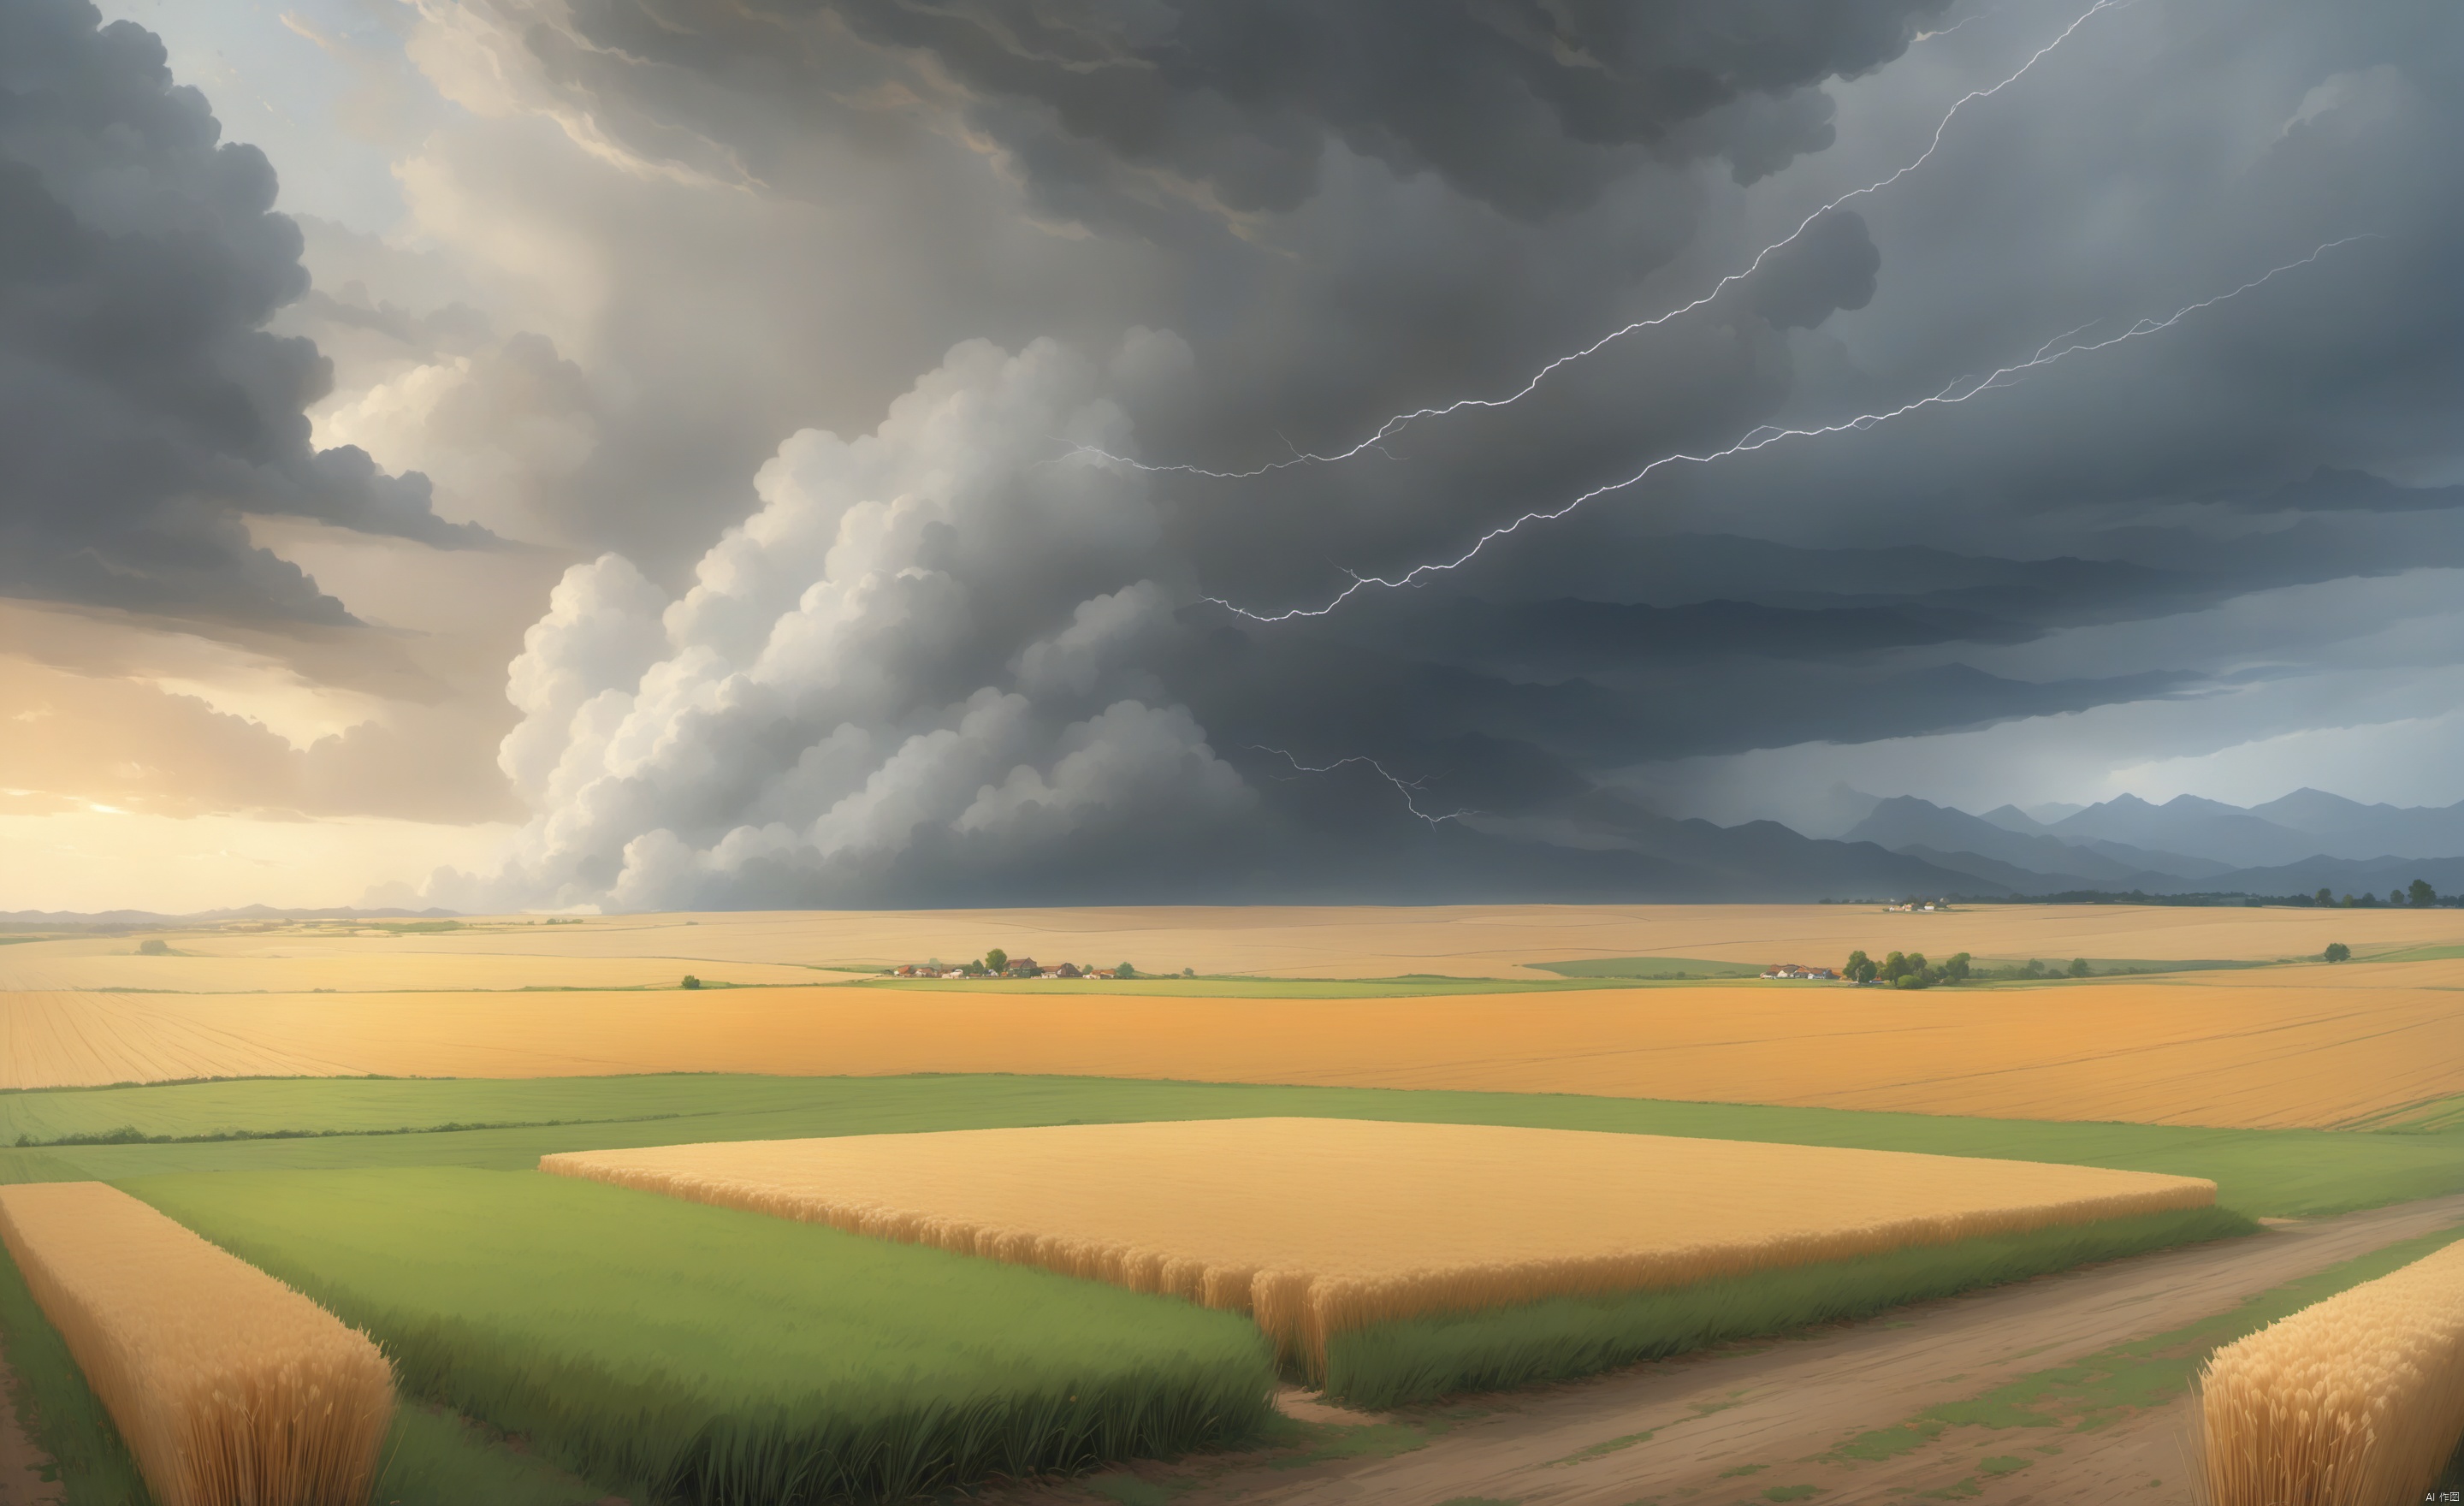 downburst cloud Asperitas clouds_1.3, Background gold Wheat Field, Accompanied by orange lightning and heavy rain, Cloudy day, landscape,乡村